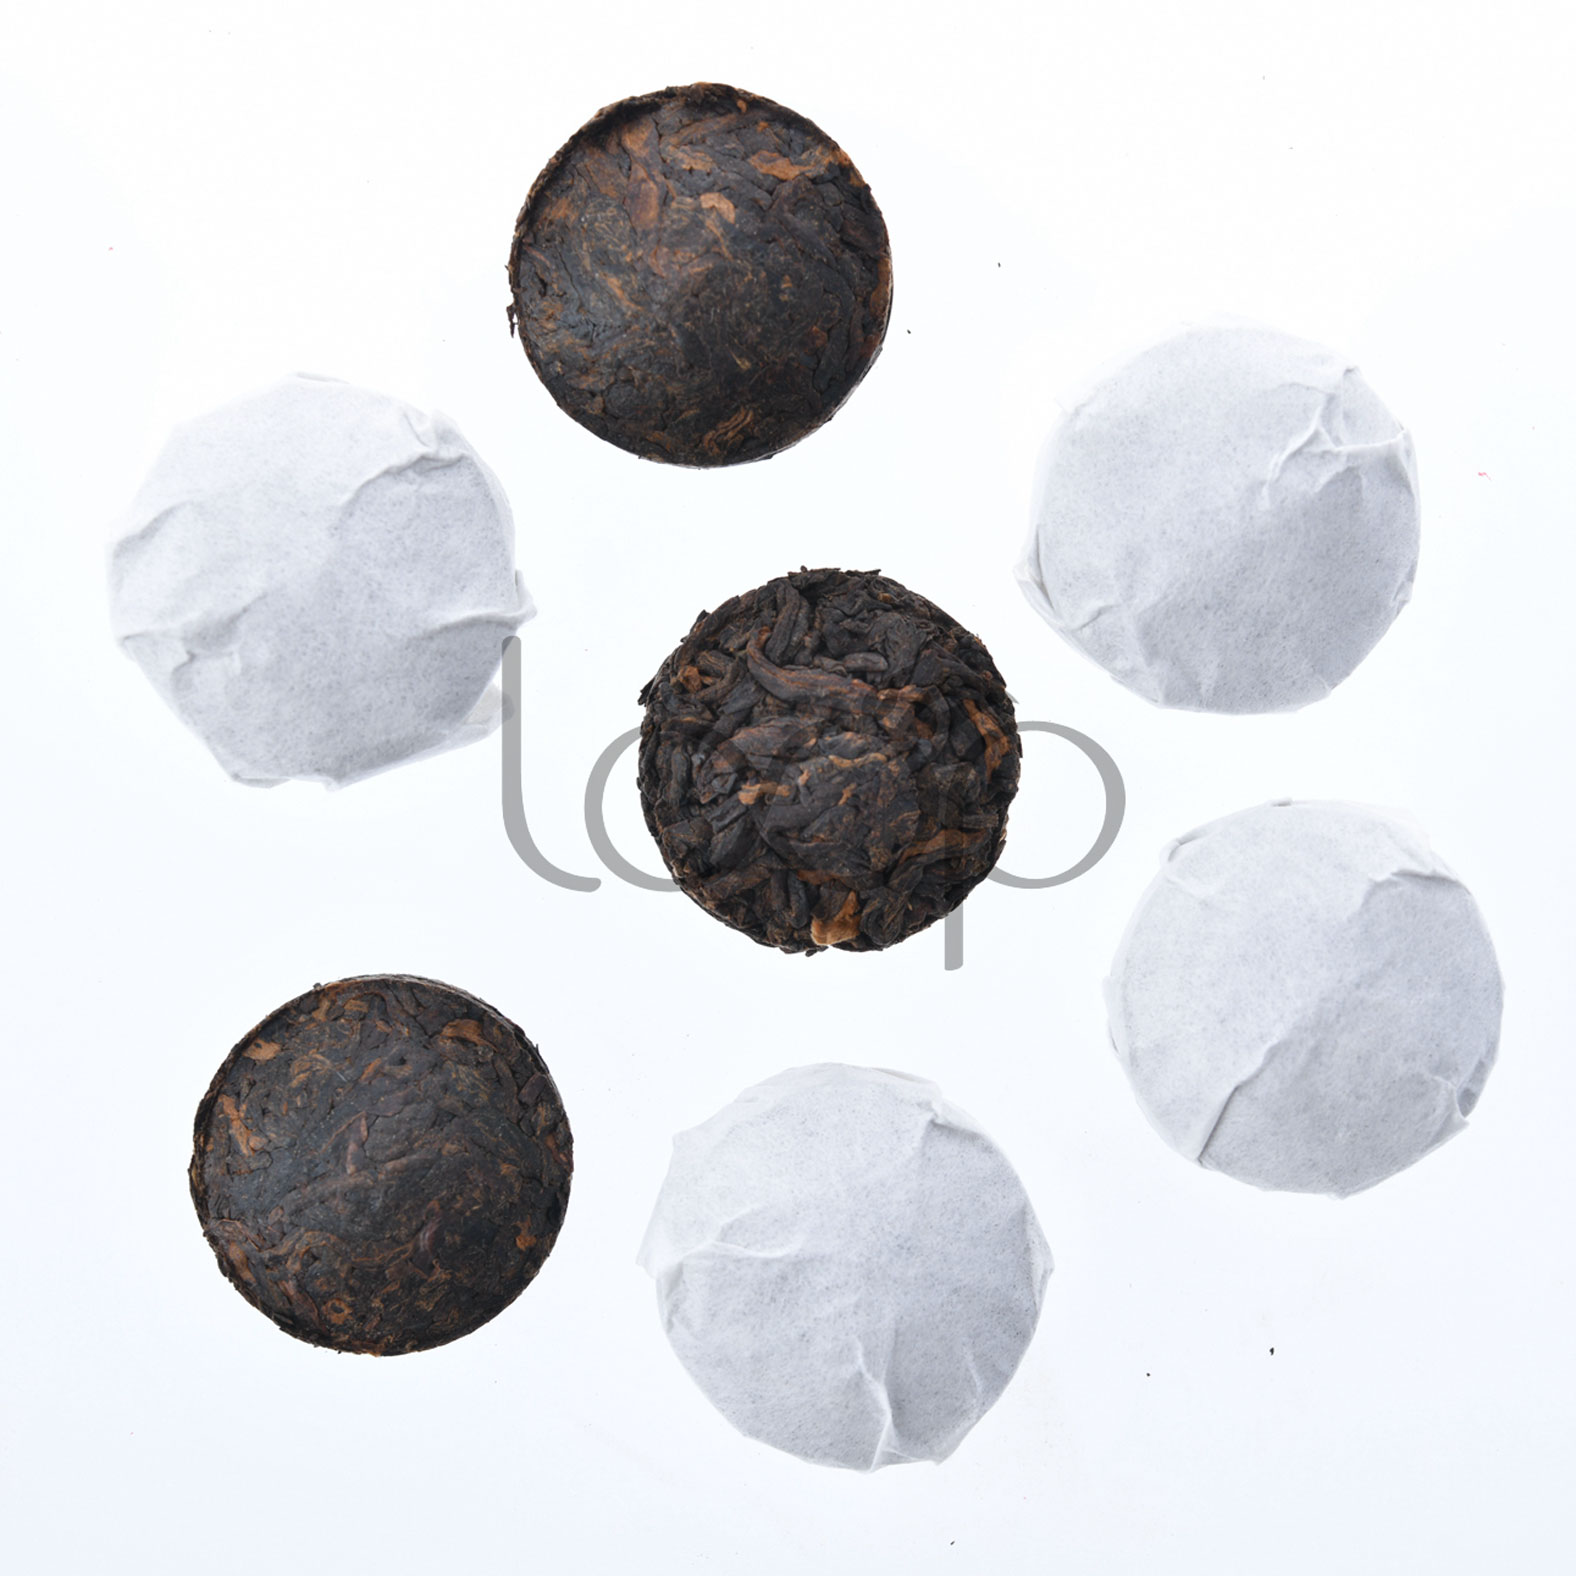 OEM/ODM China Organic Earl Grey Loose Leaf Tea - Tuo Cha Puerh Tuo Tea #1 – Goodtea